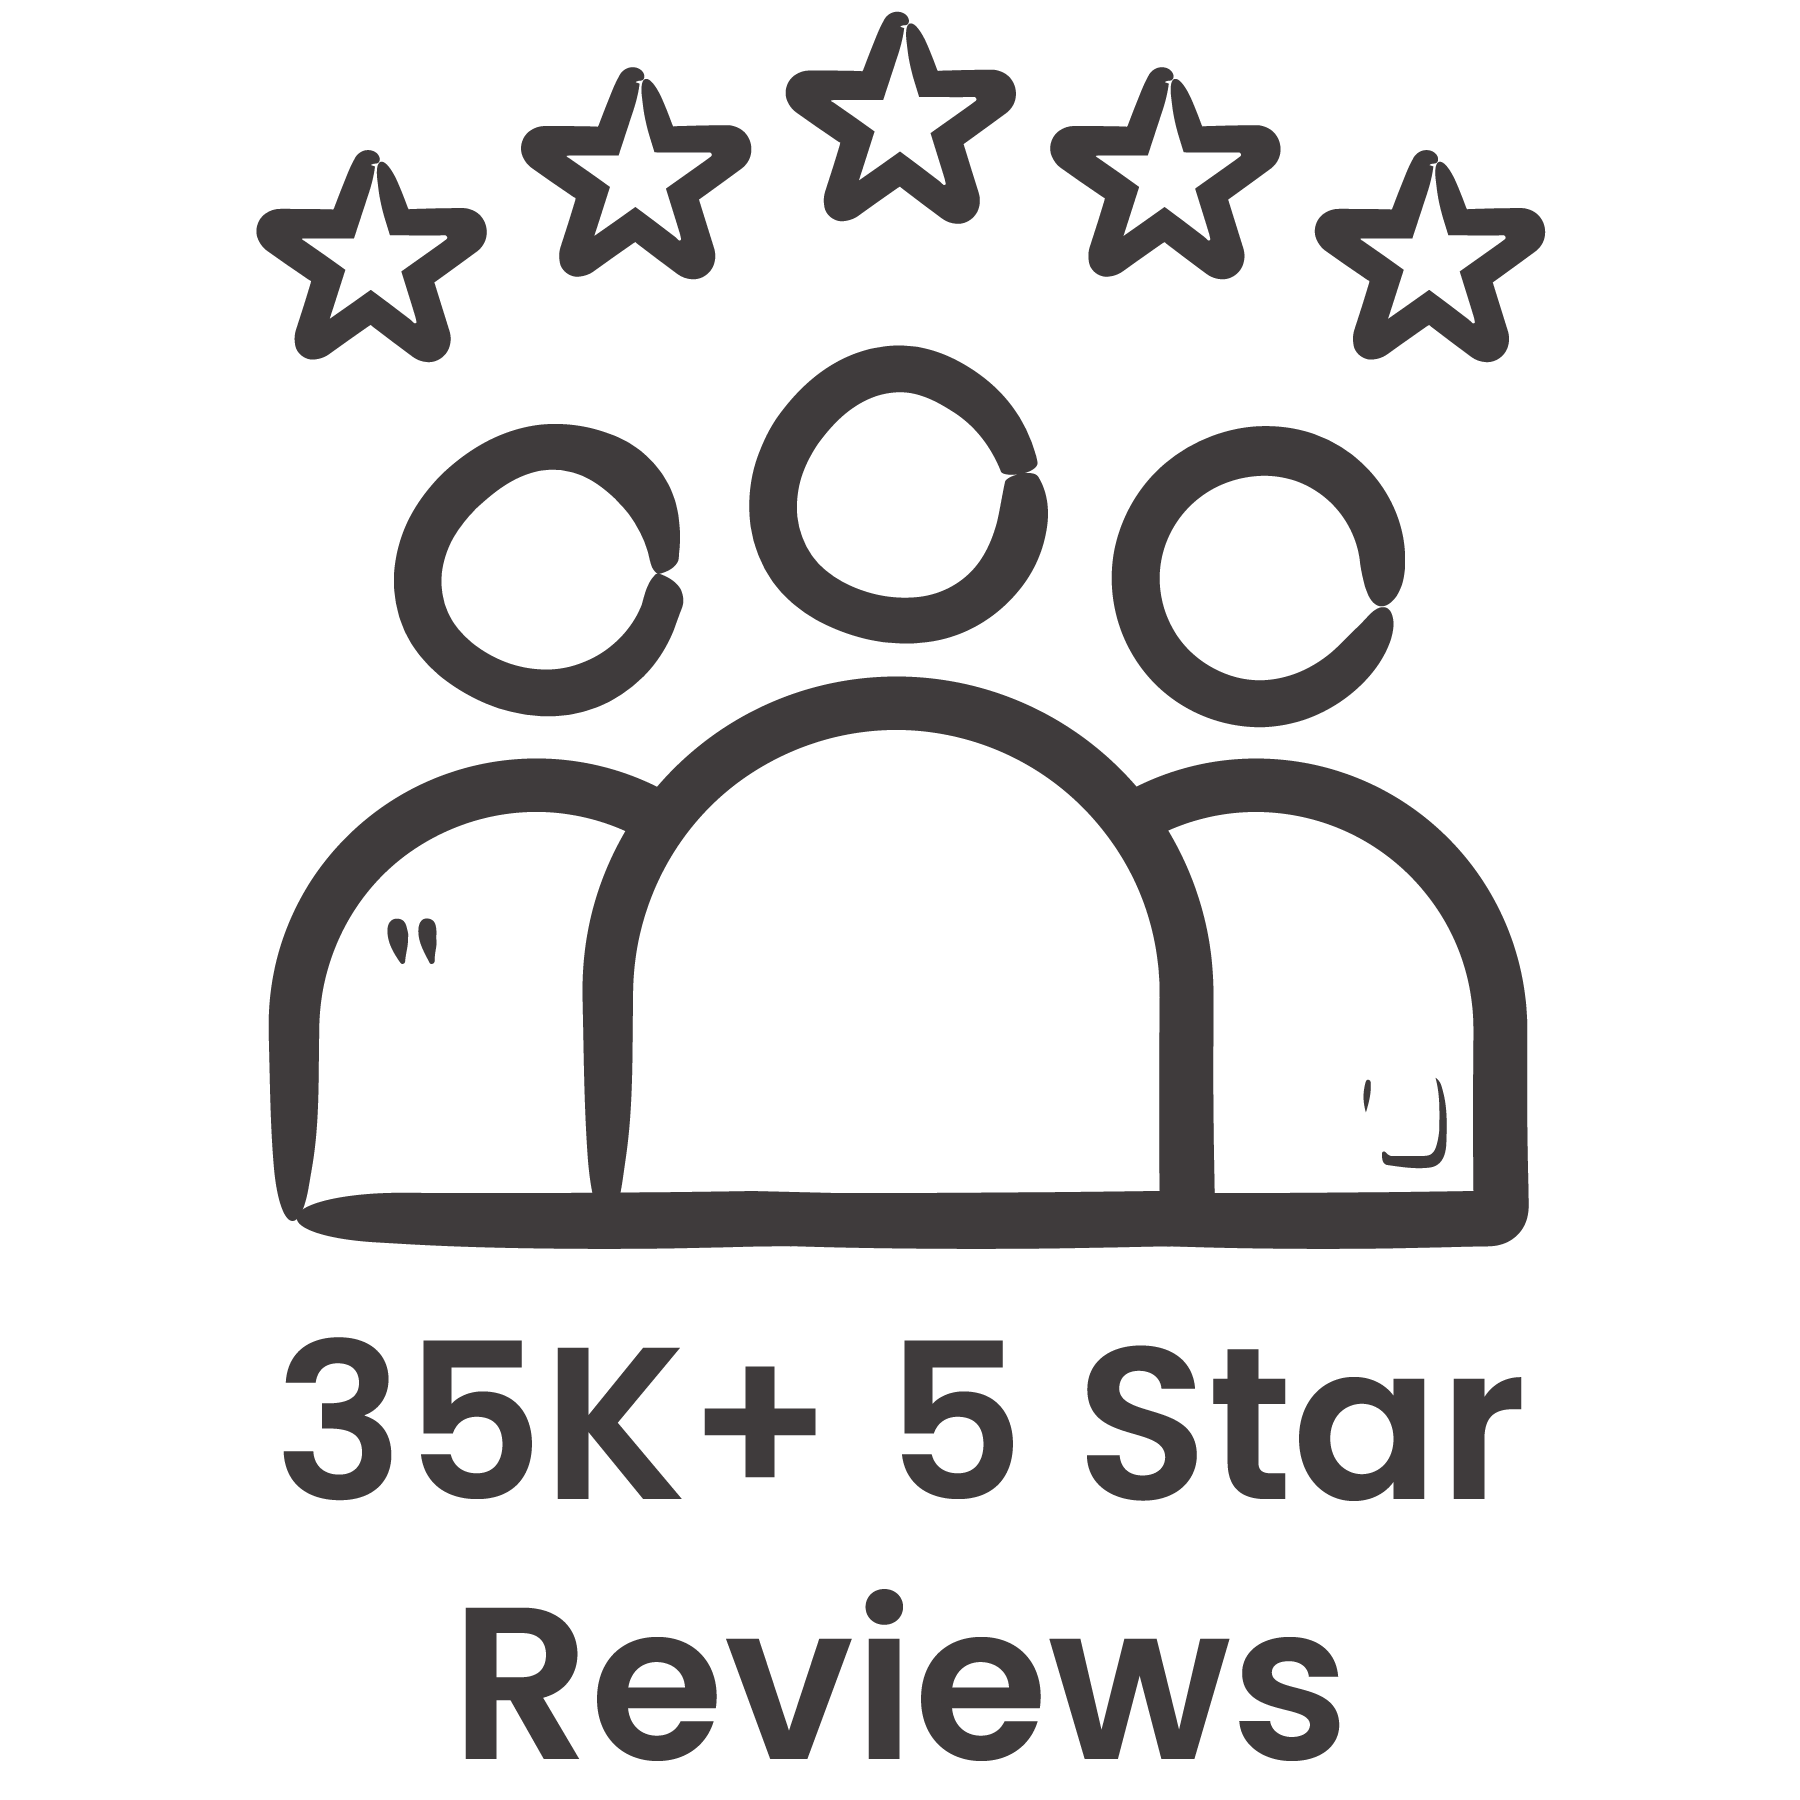 35,000+ 5 Star Reviews